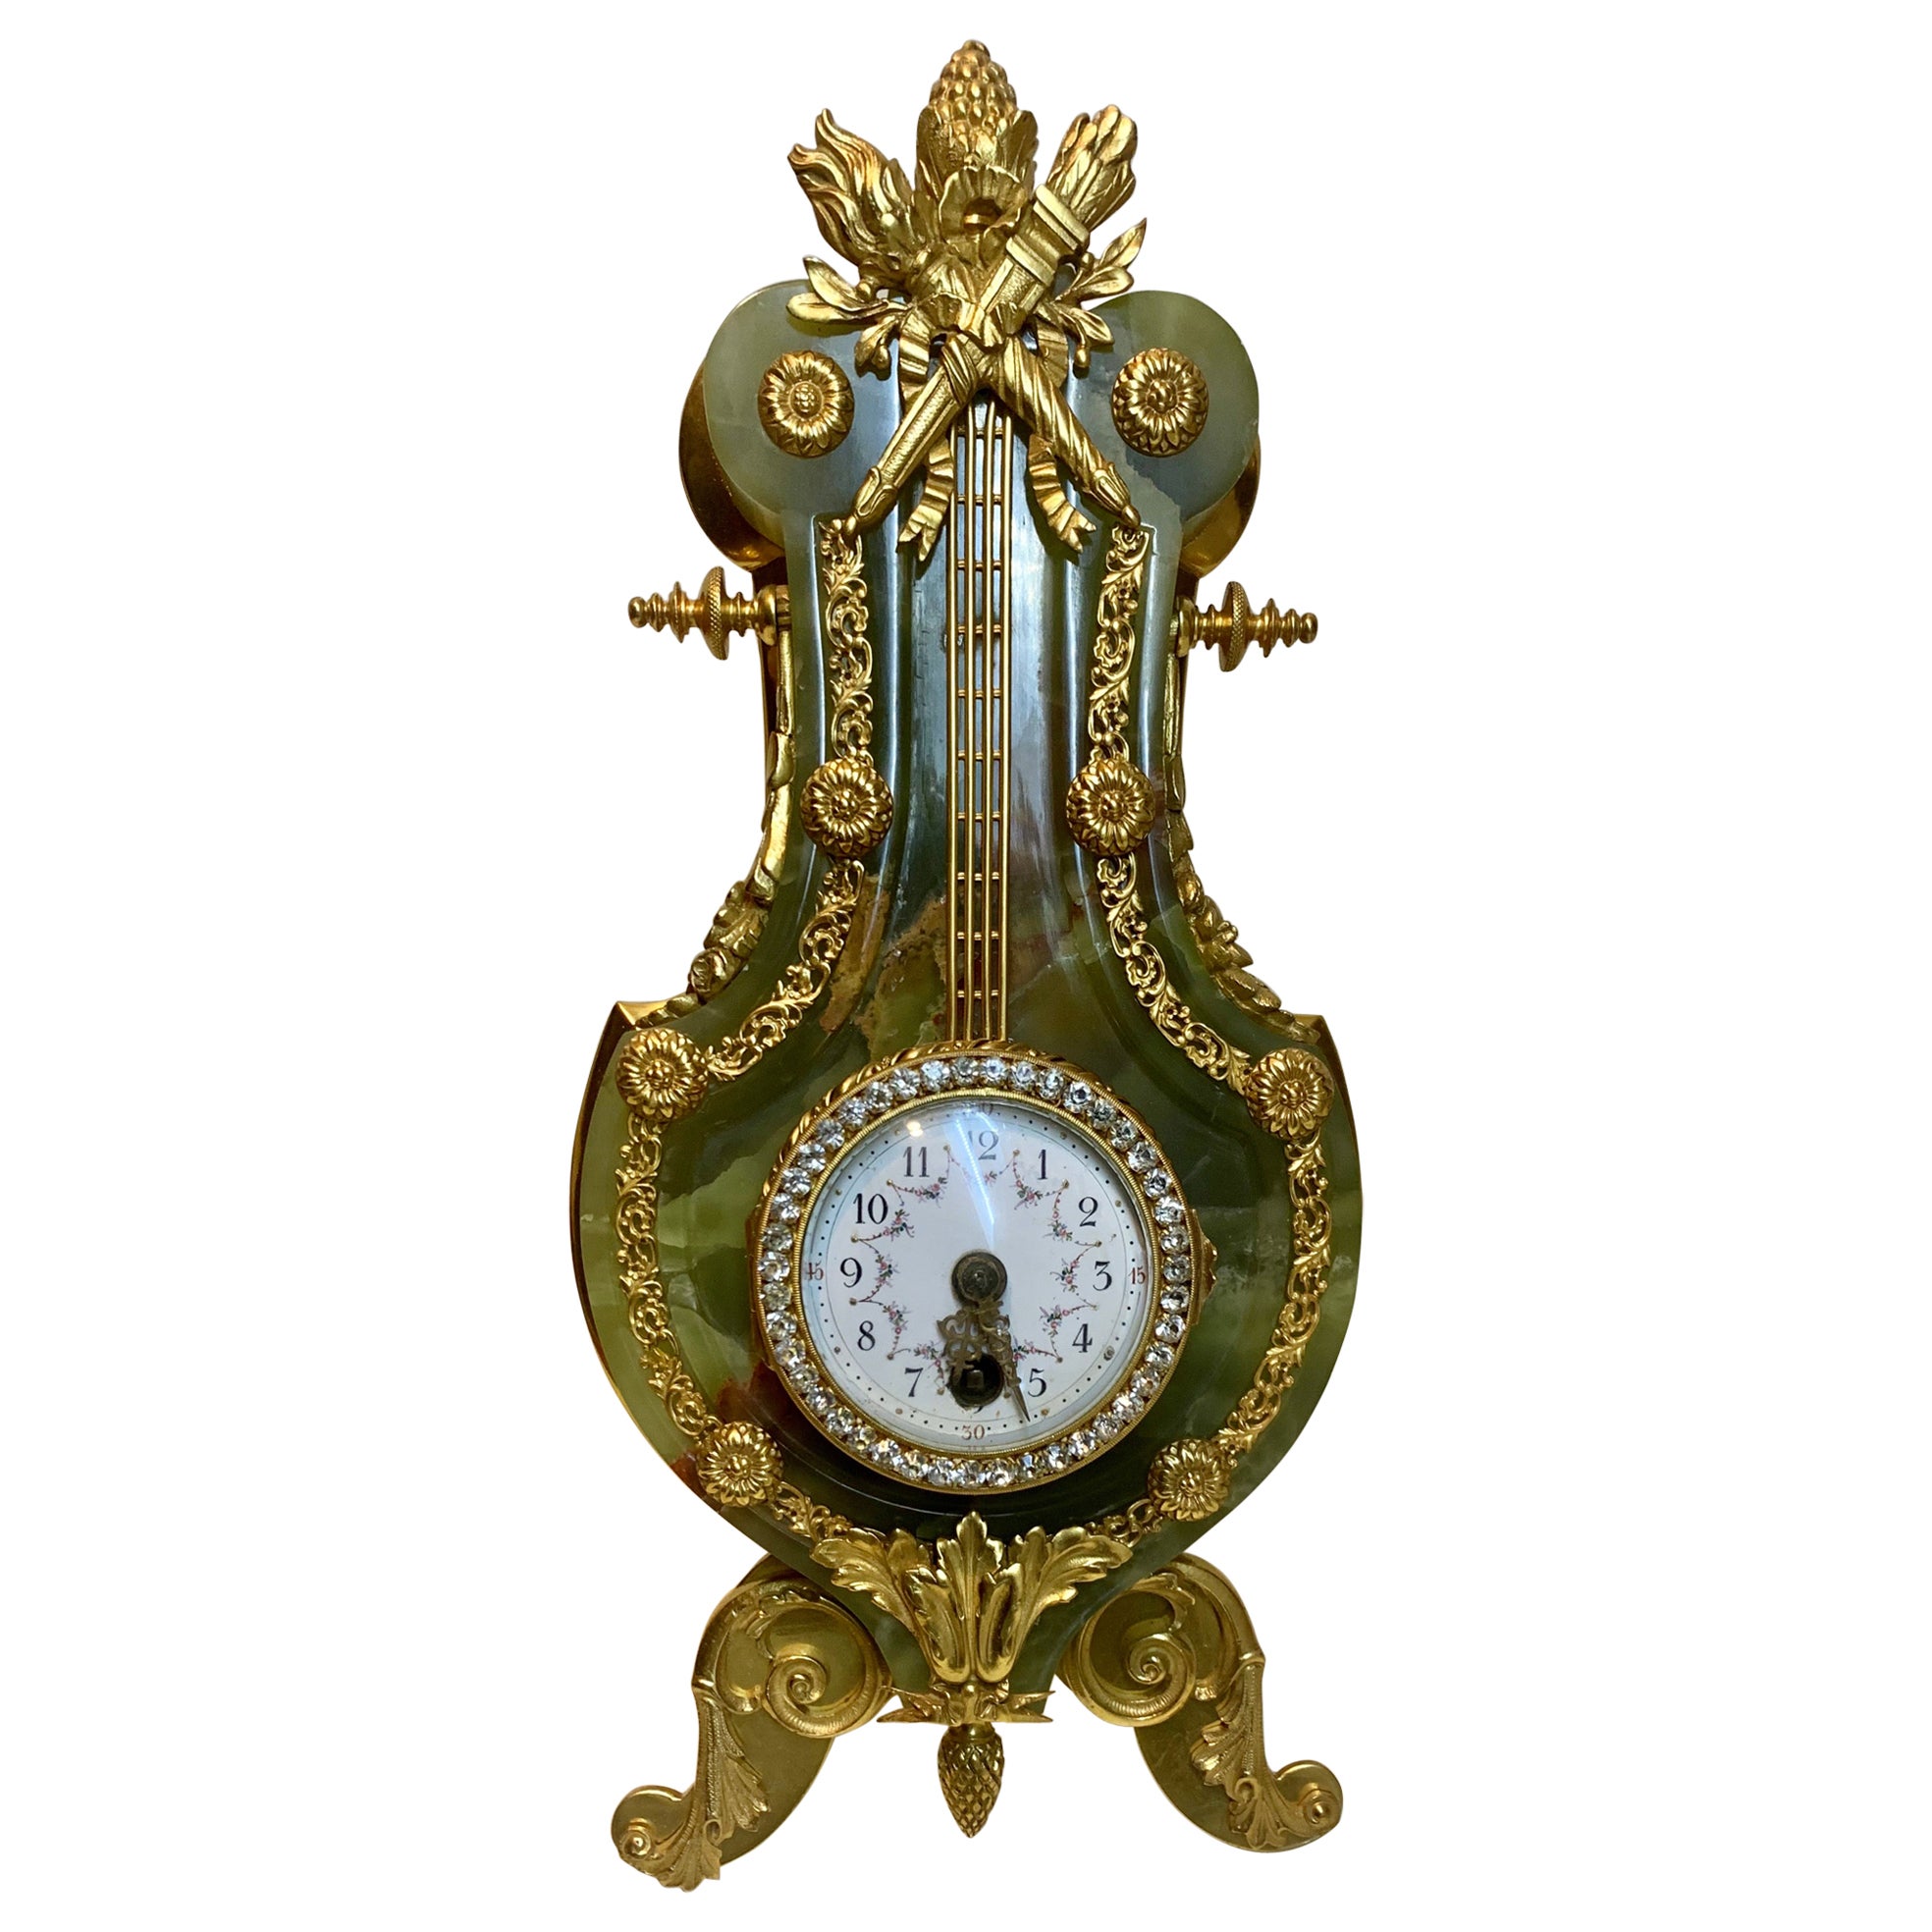 Superb Antique Onyx, Ormolu & Jewelled Strut Clock, French 19th C